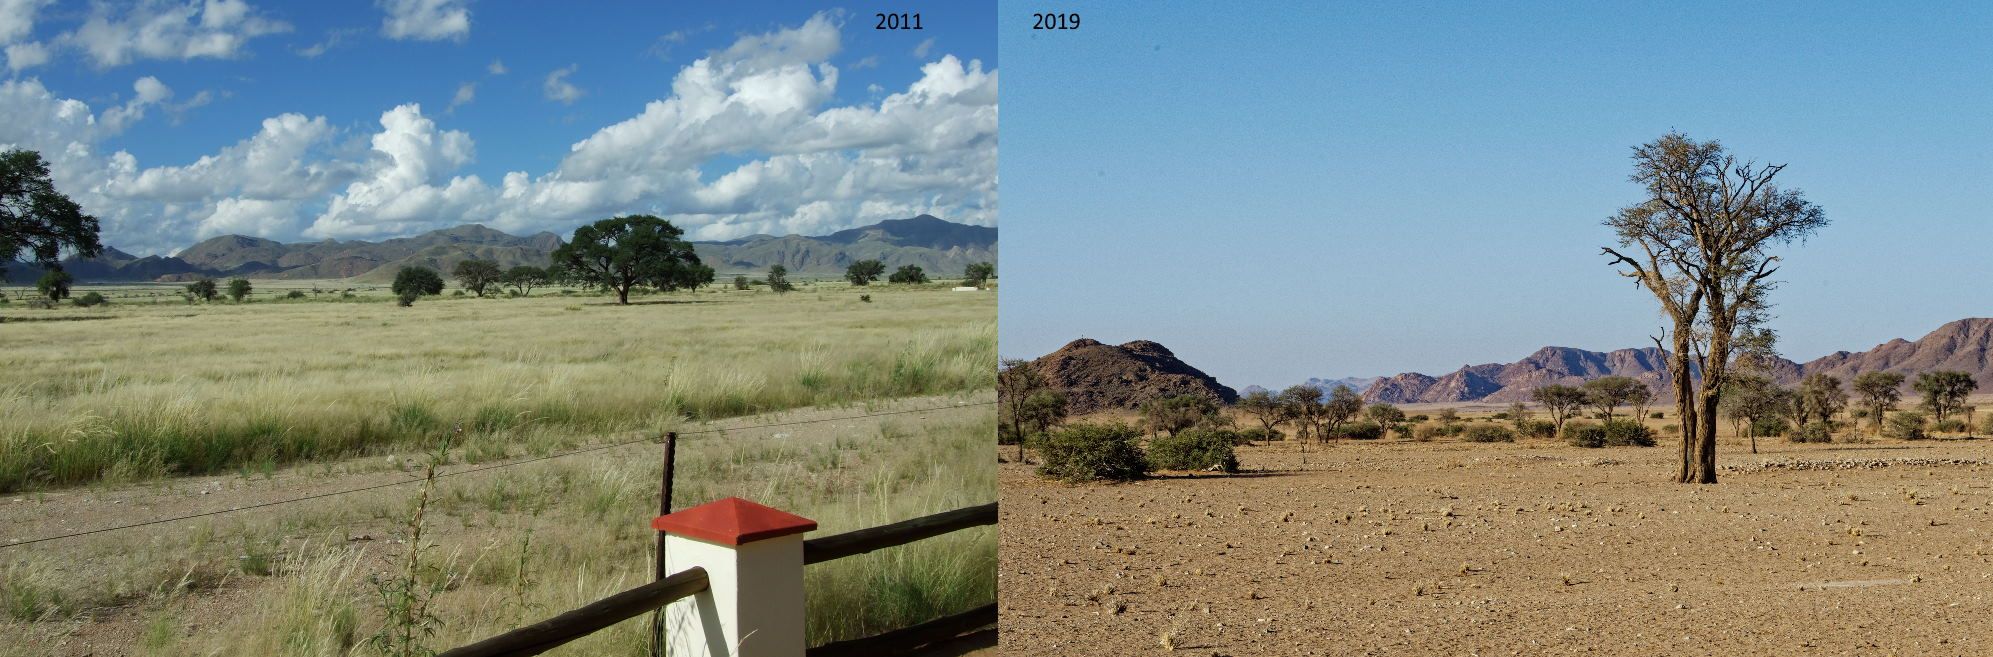 Kontraste: Namibia 2011 und 2019